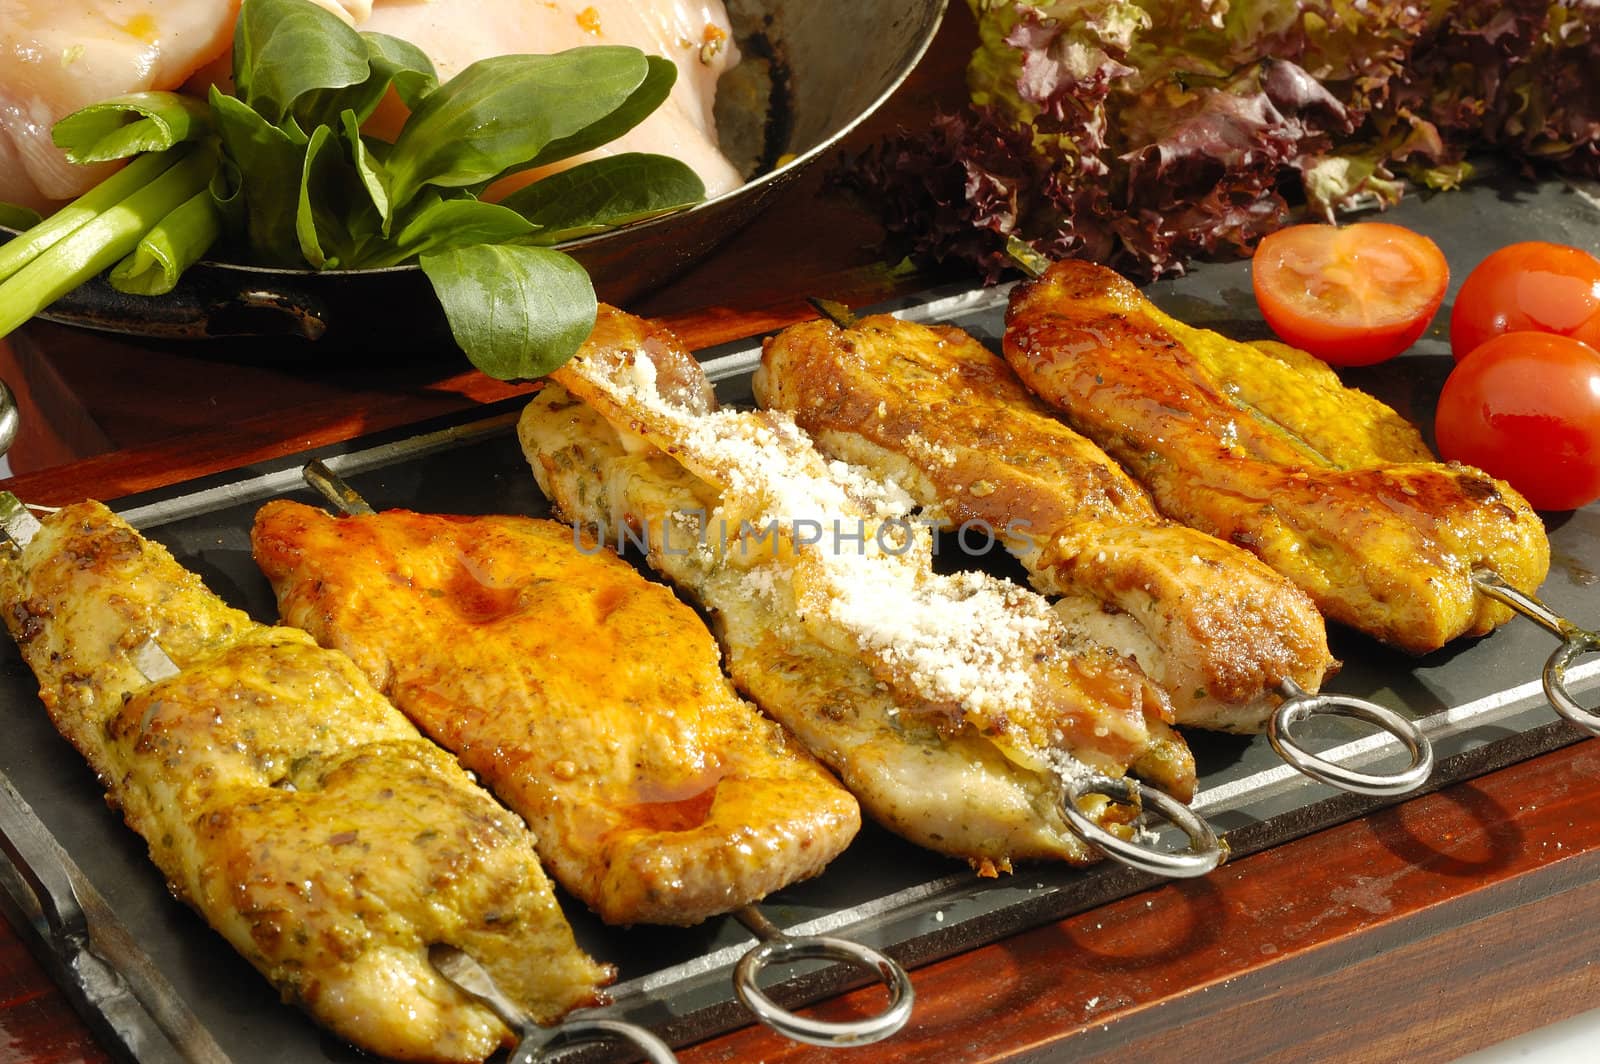 Grilled chicken breast by hanusst